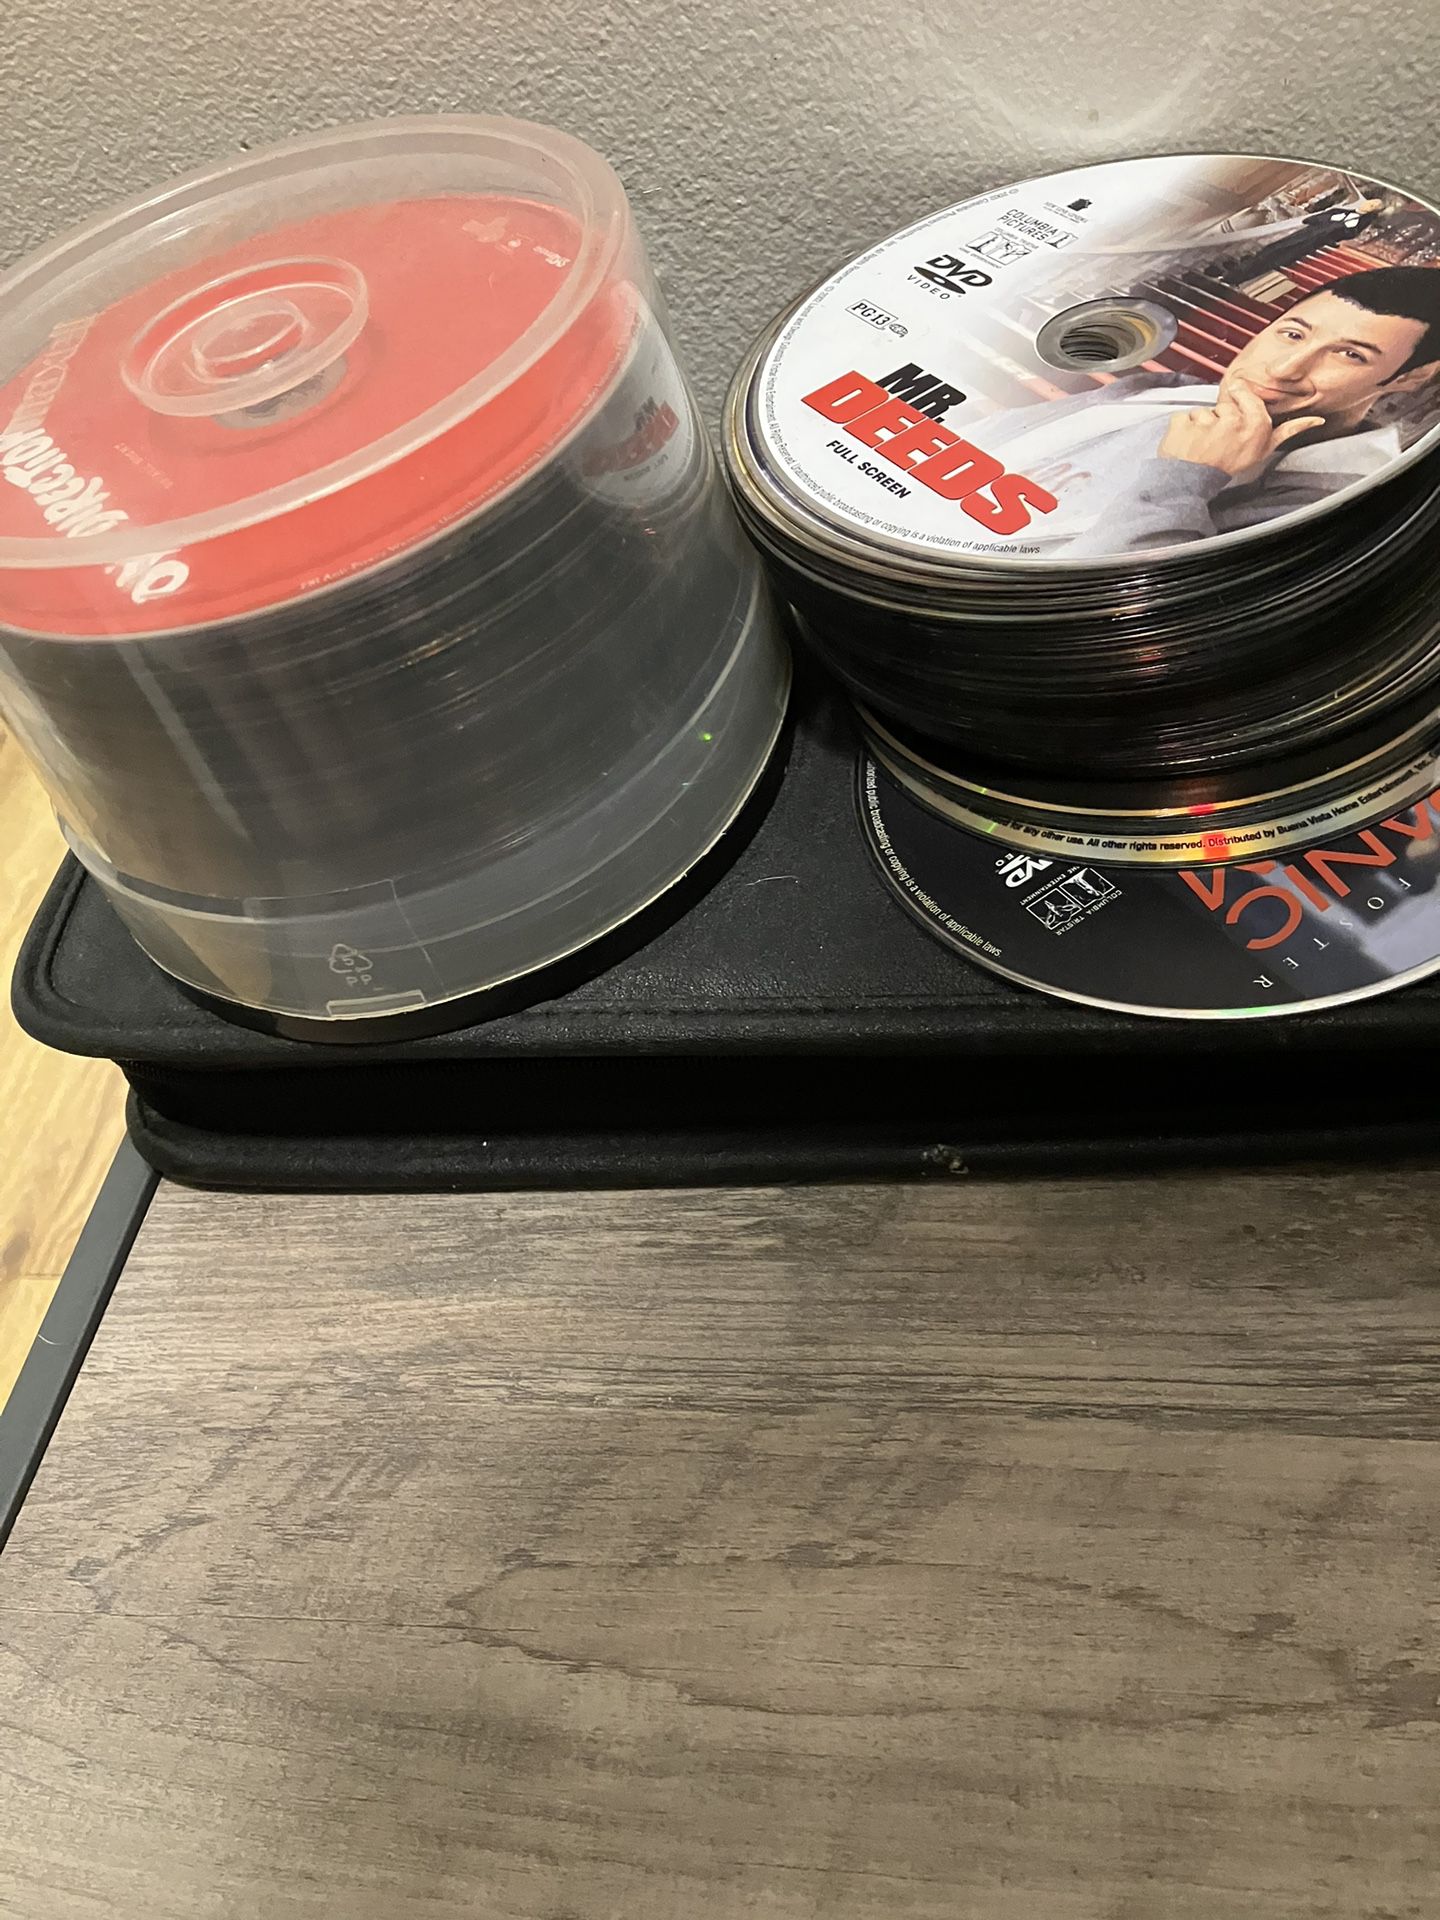 LOTS OF DVDS 